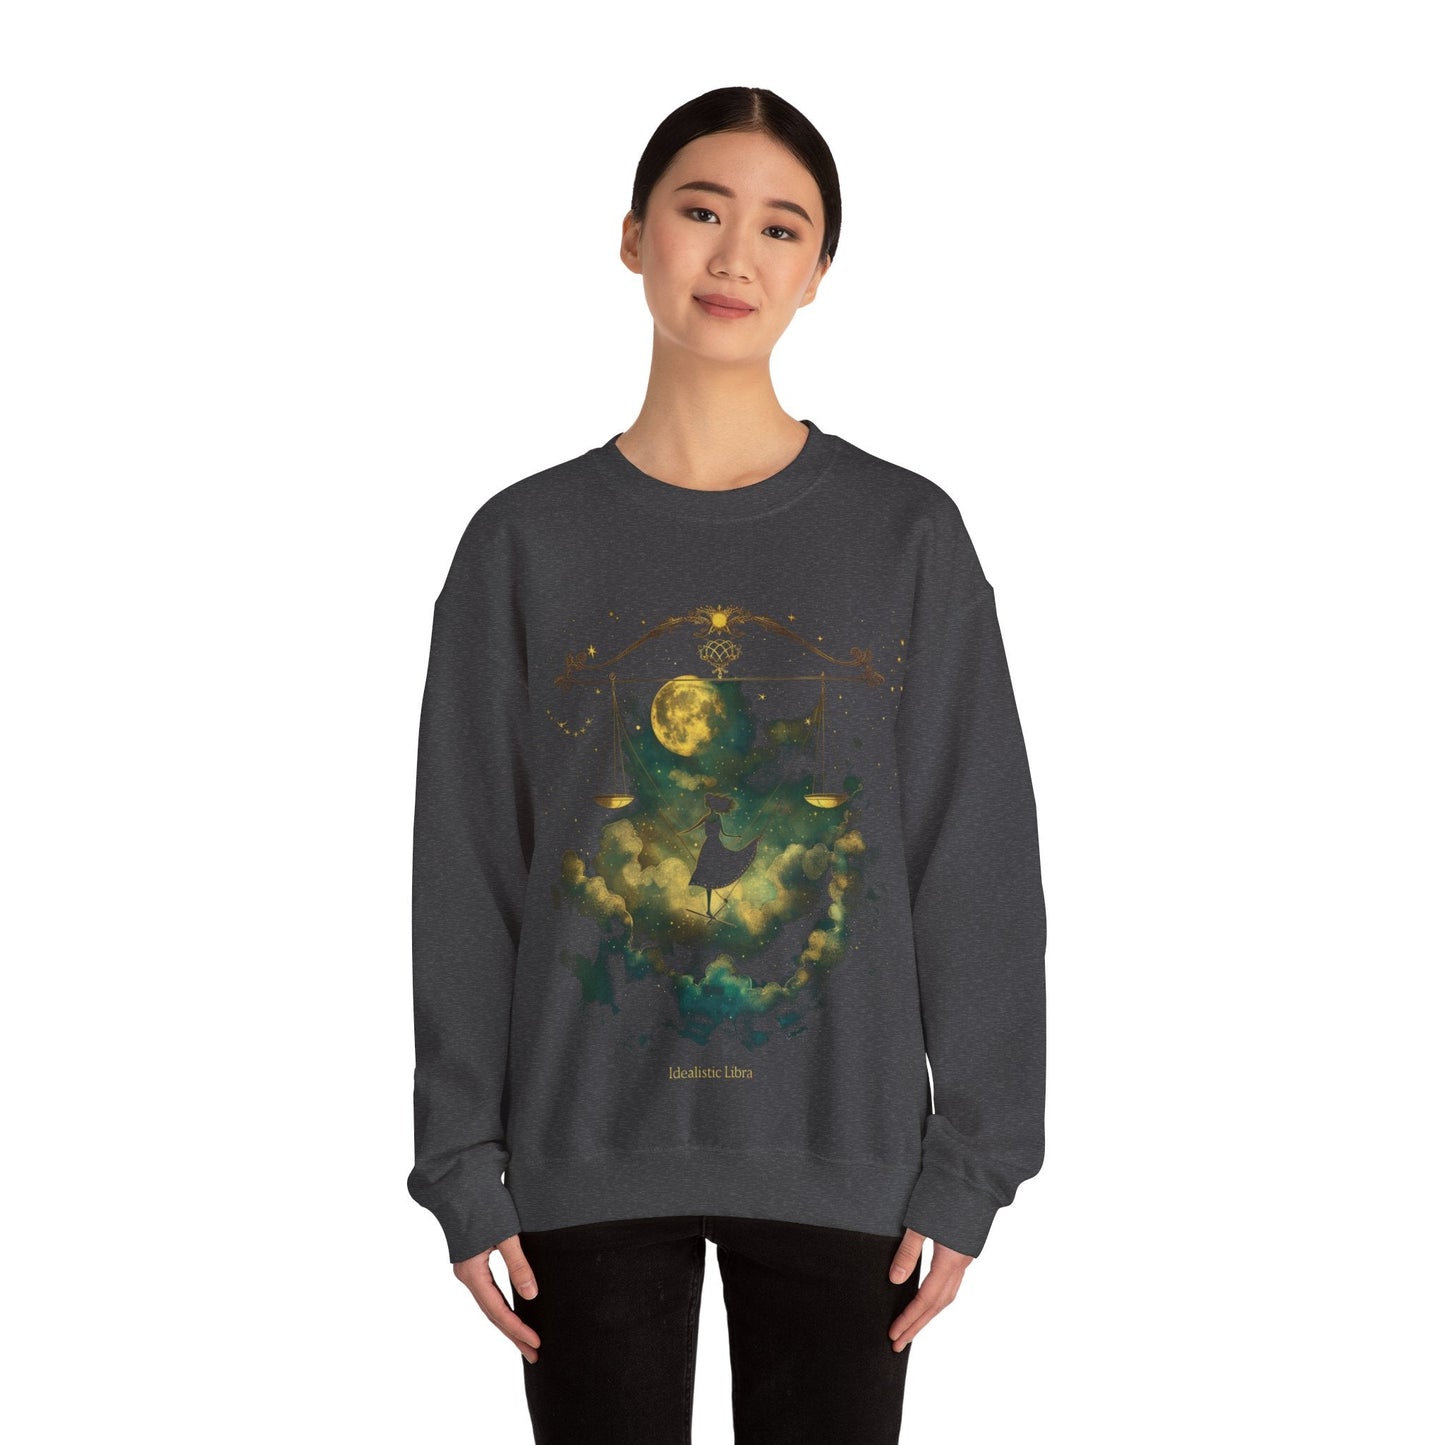 Sweatshirt "Starry Scales" Libra Idealistic Sweater: Celestial Elegance